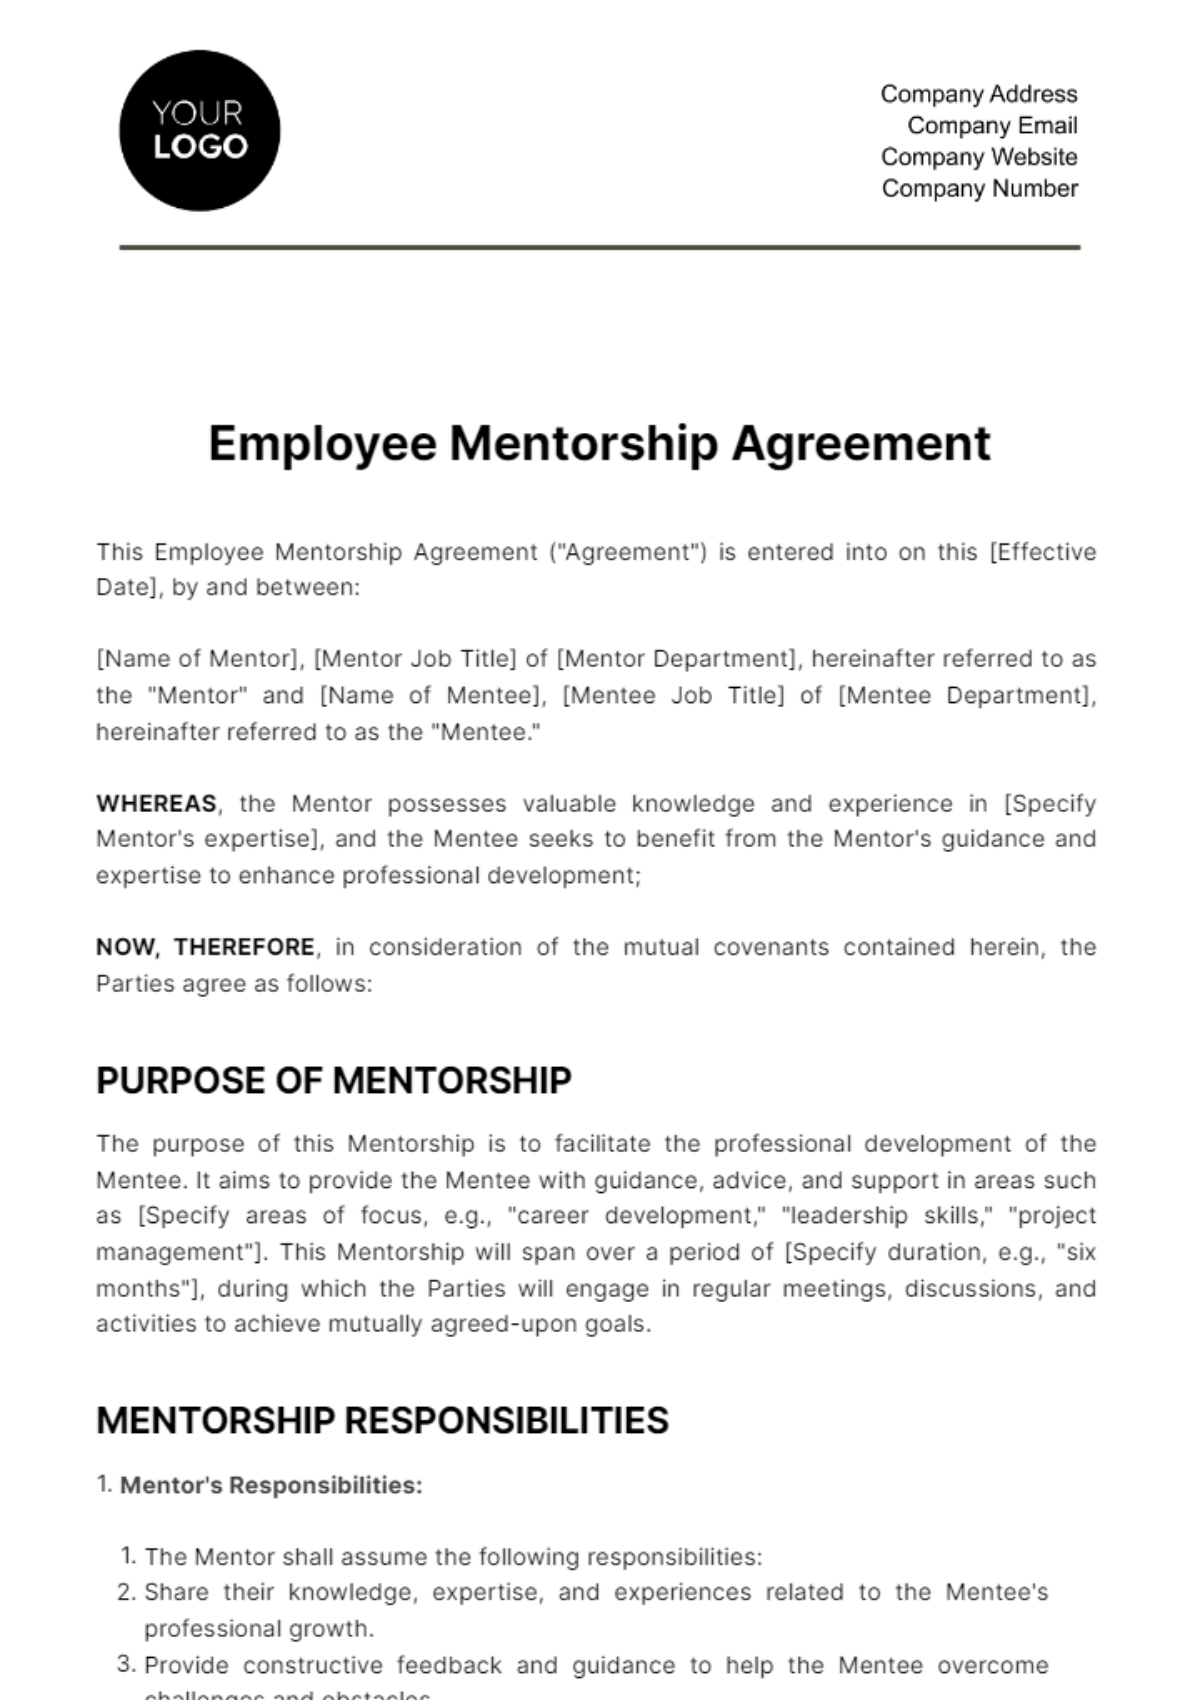 Employee Mentorship Agreement HR Template